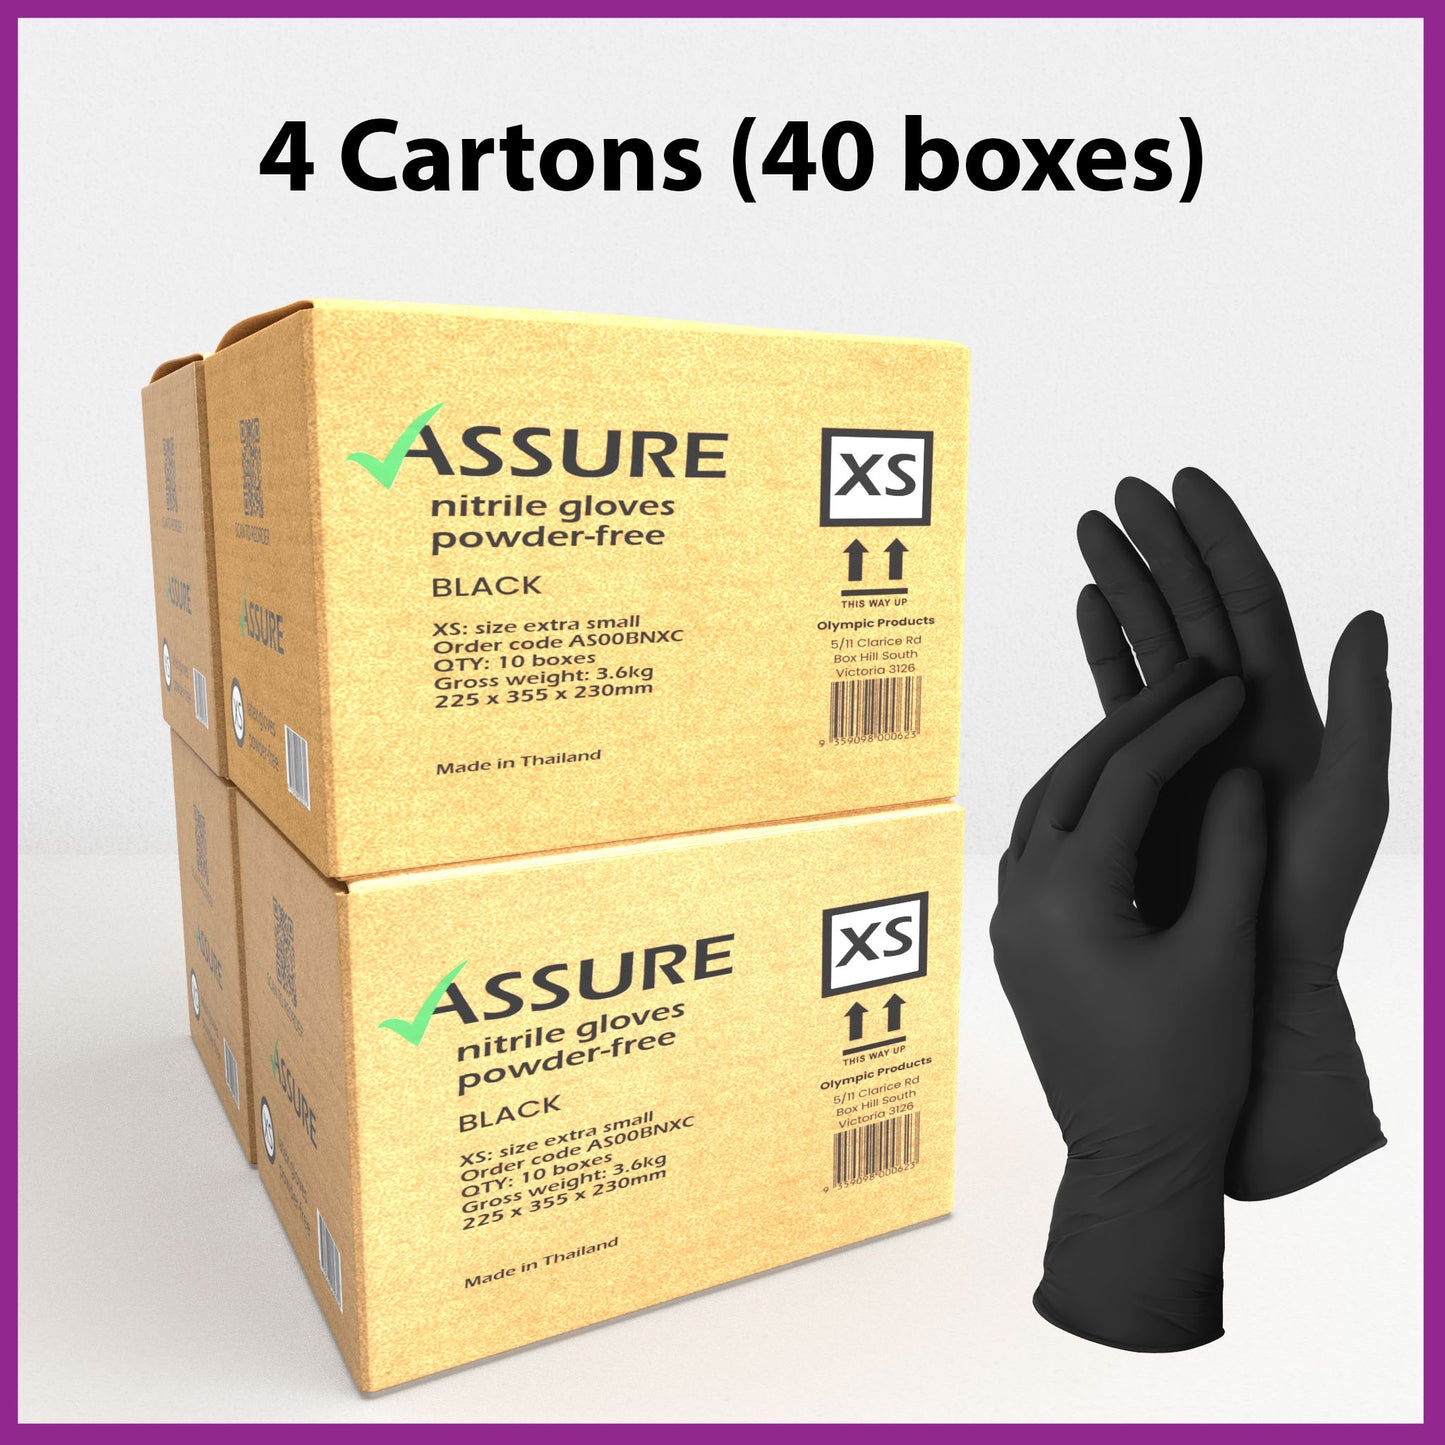 Bulk Saver - ASSURE Black Nitrile Gloves, 4 cartons @ $5.50 per box